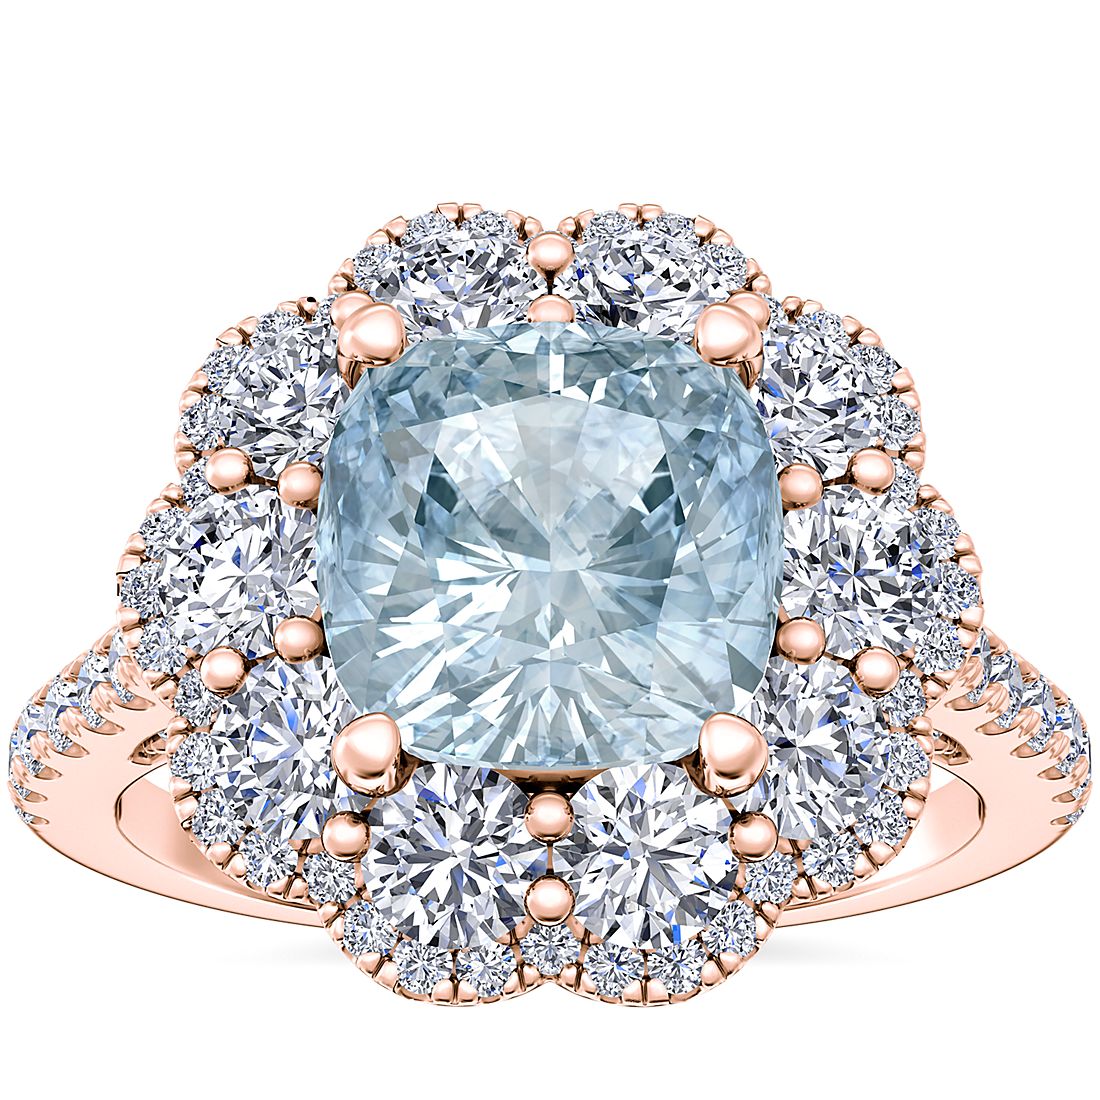 Vintage Diamond Halo Engagement Ring with Cushion Aquamarine in 14k Rose Gold (8mm)